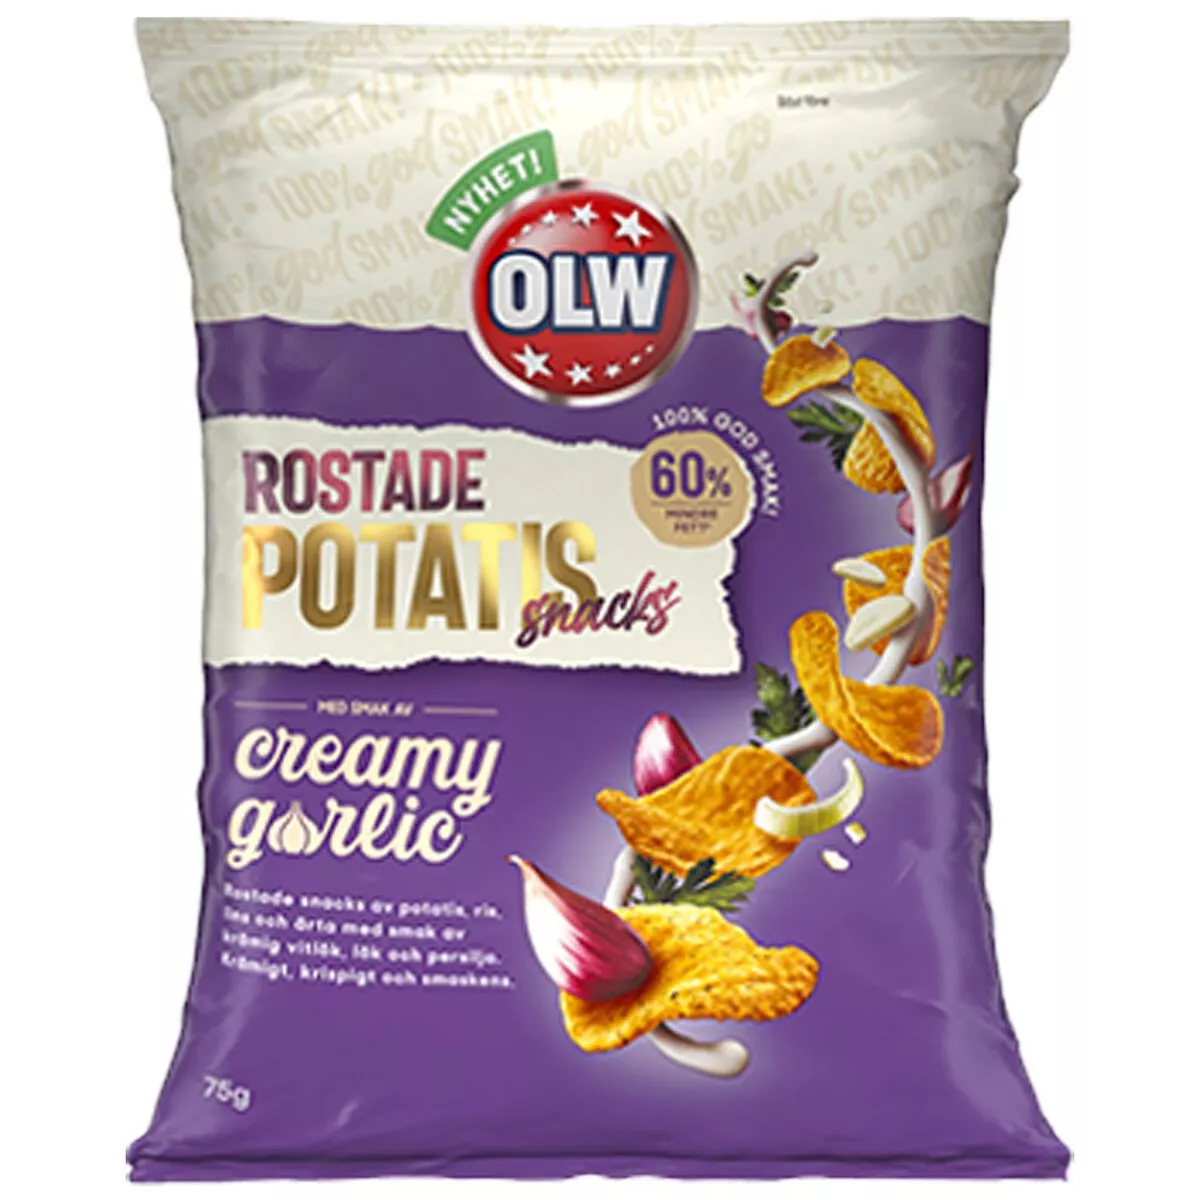 OLW Rostade Potatissnacks Tasty Creamy Garlic (75g) 1